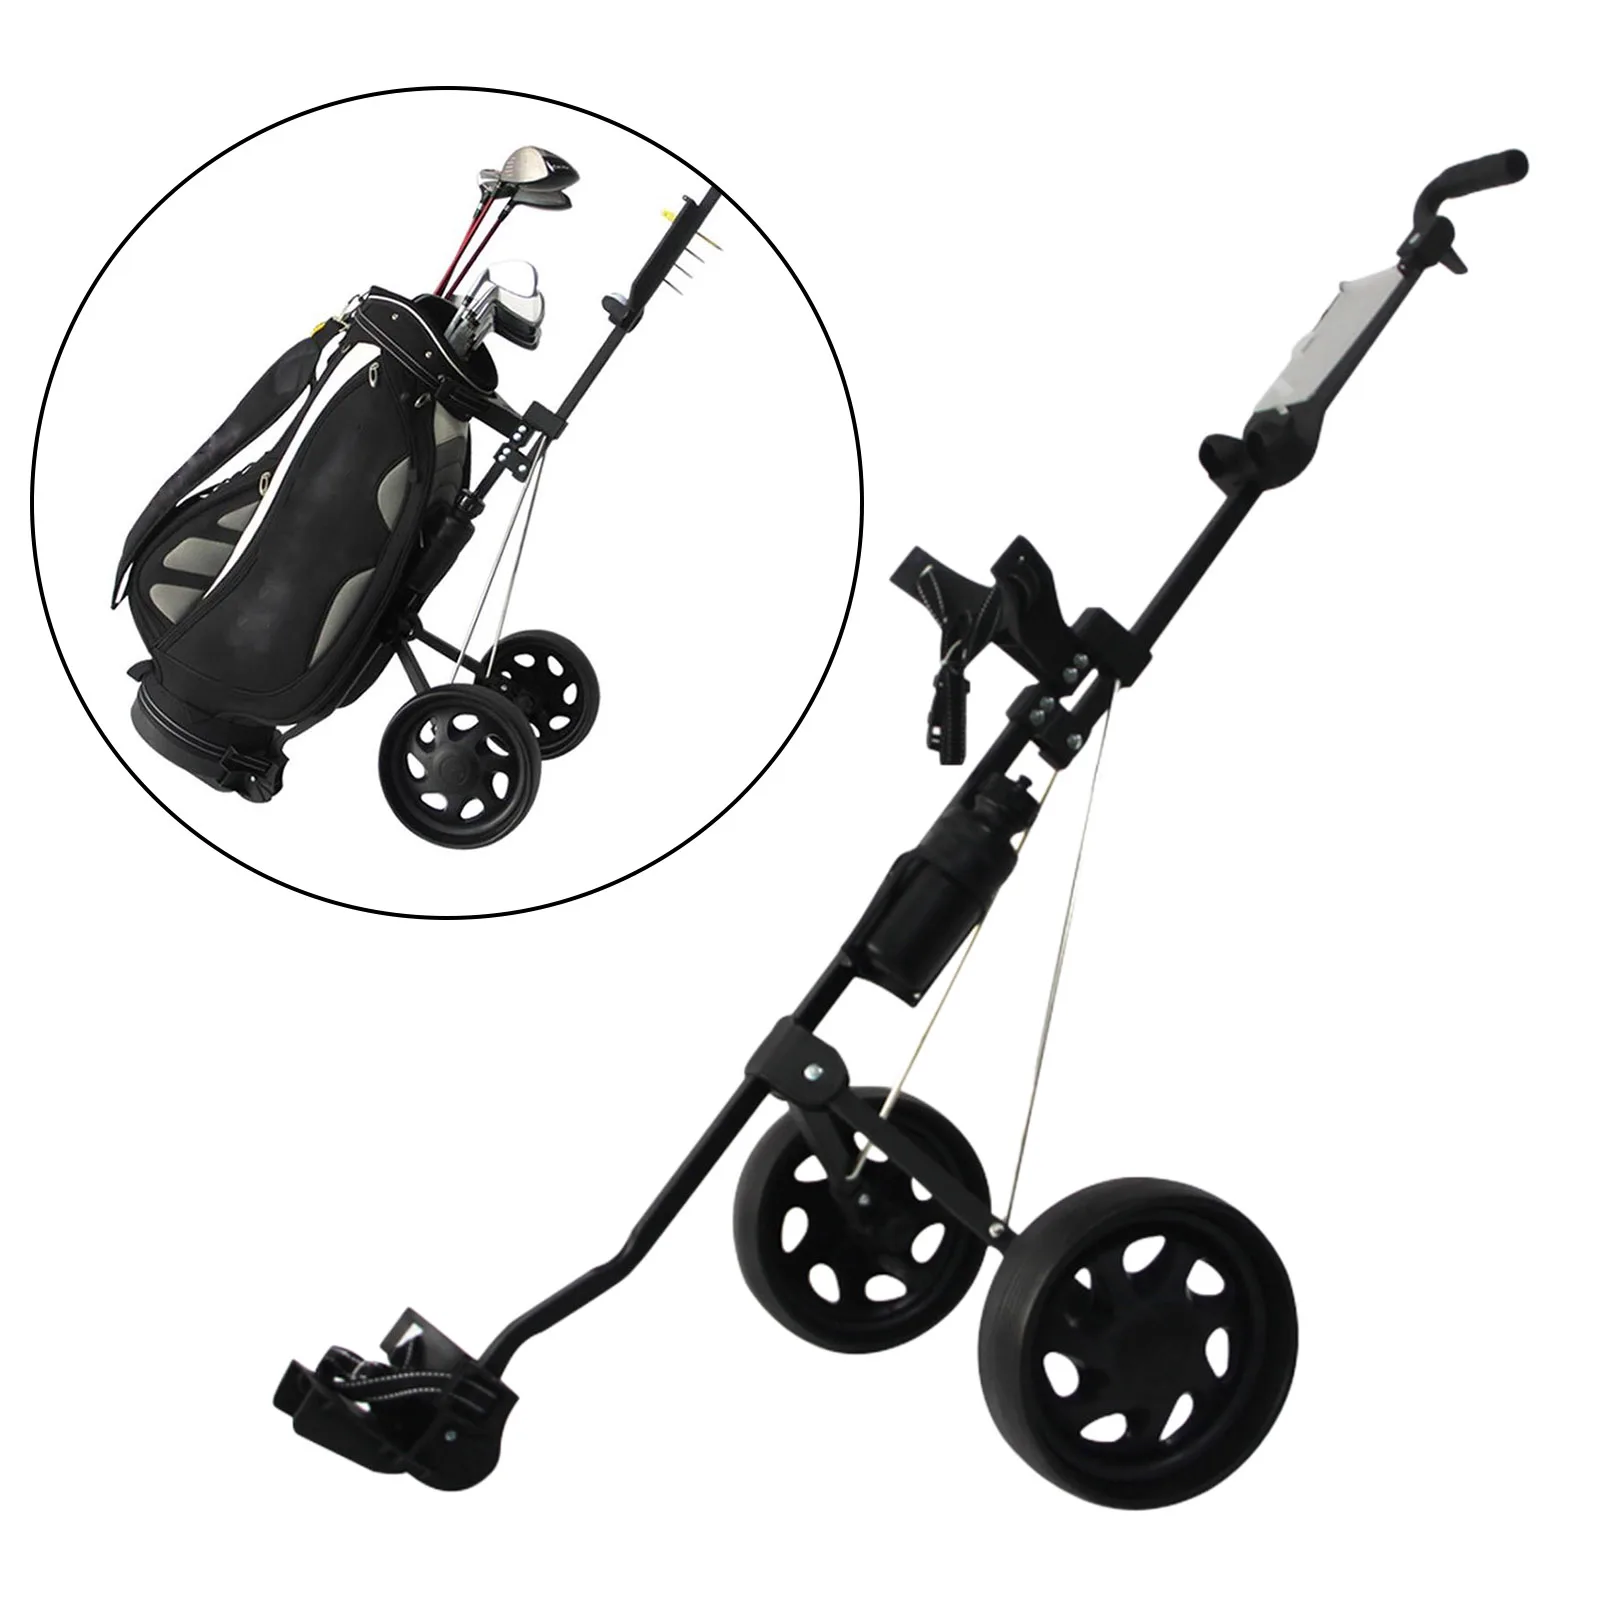 2 Wheel Foldable Golf Pull Trolley Push Cart Bag Stand Golf Buggies Carts